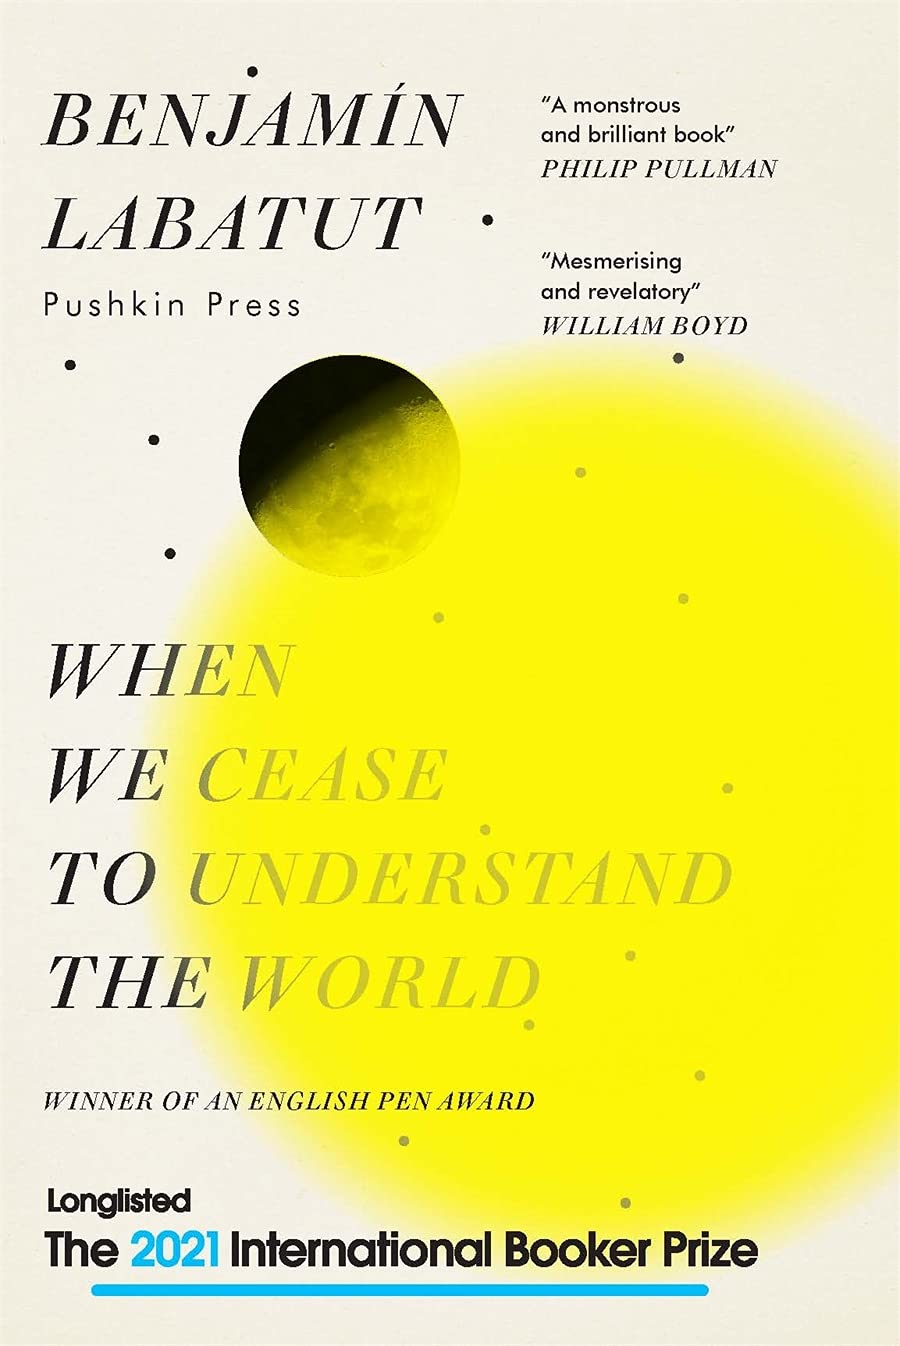 When We Cease to Understand the World by Benjamin Labatut (Pushkin, £14.99) is on the Booker International longlist.